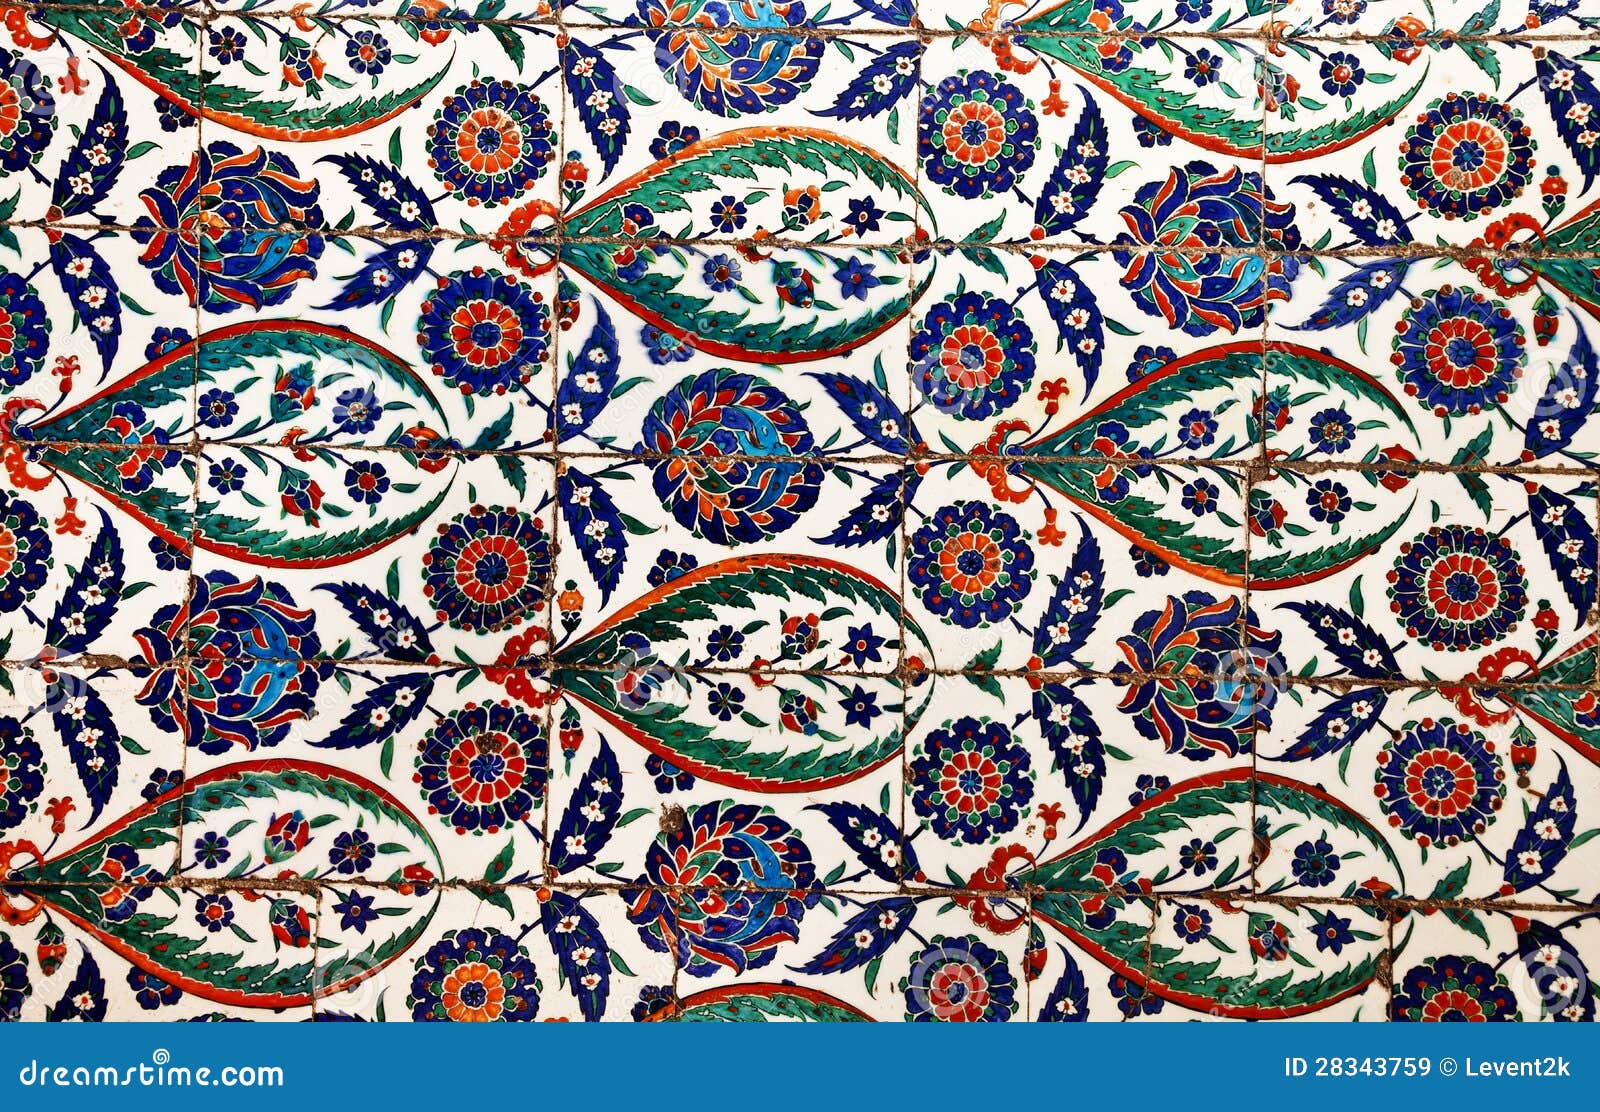 Sultanahmet Blue Mosque Interior Tiles Stock Image Image